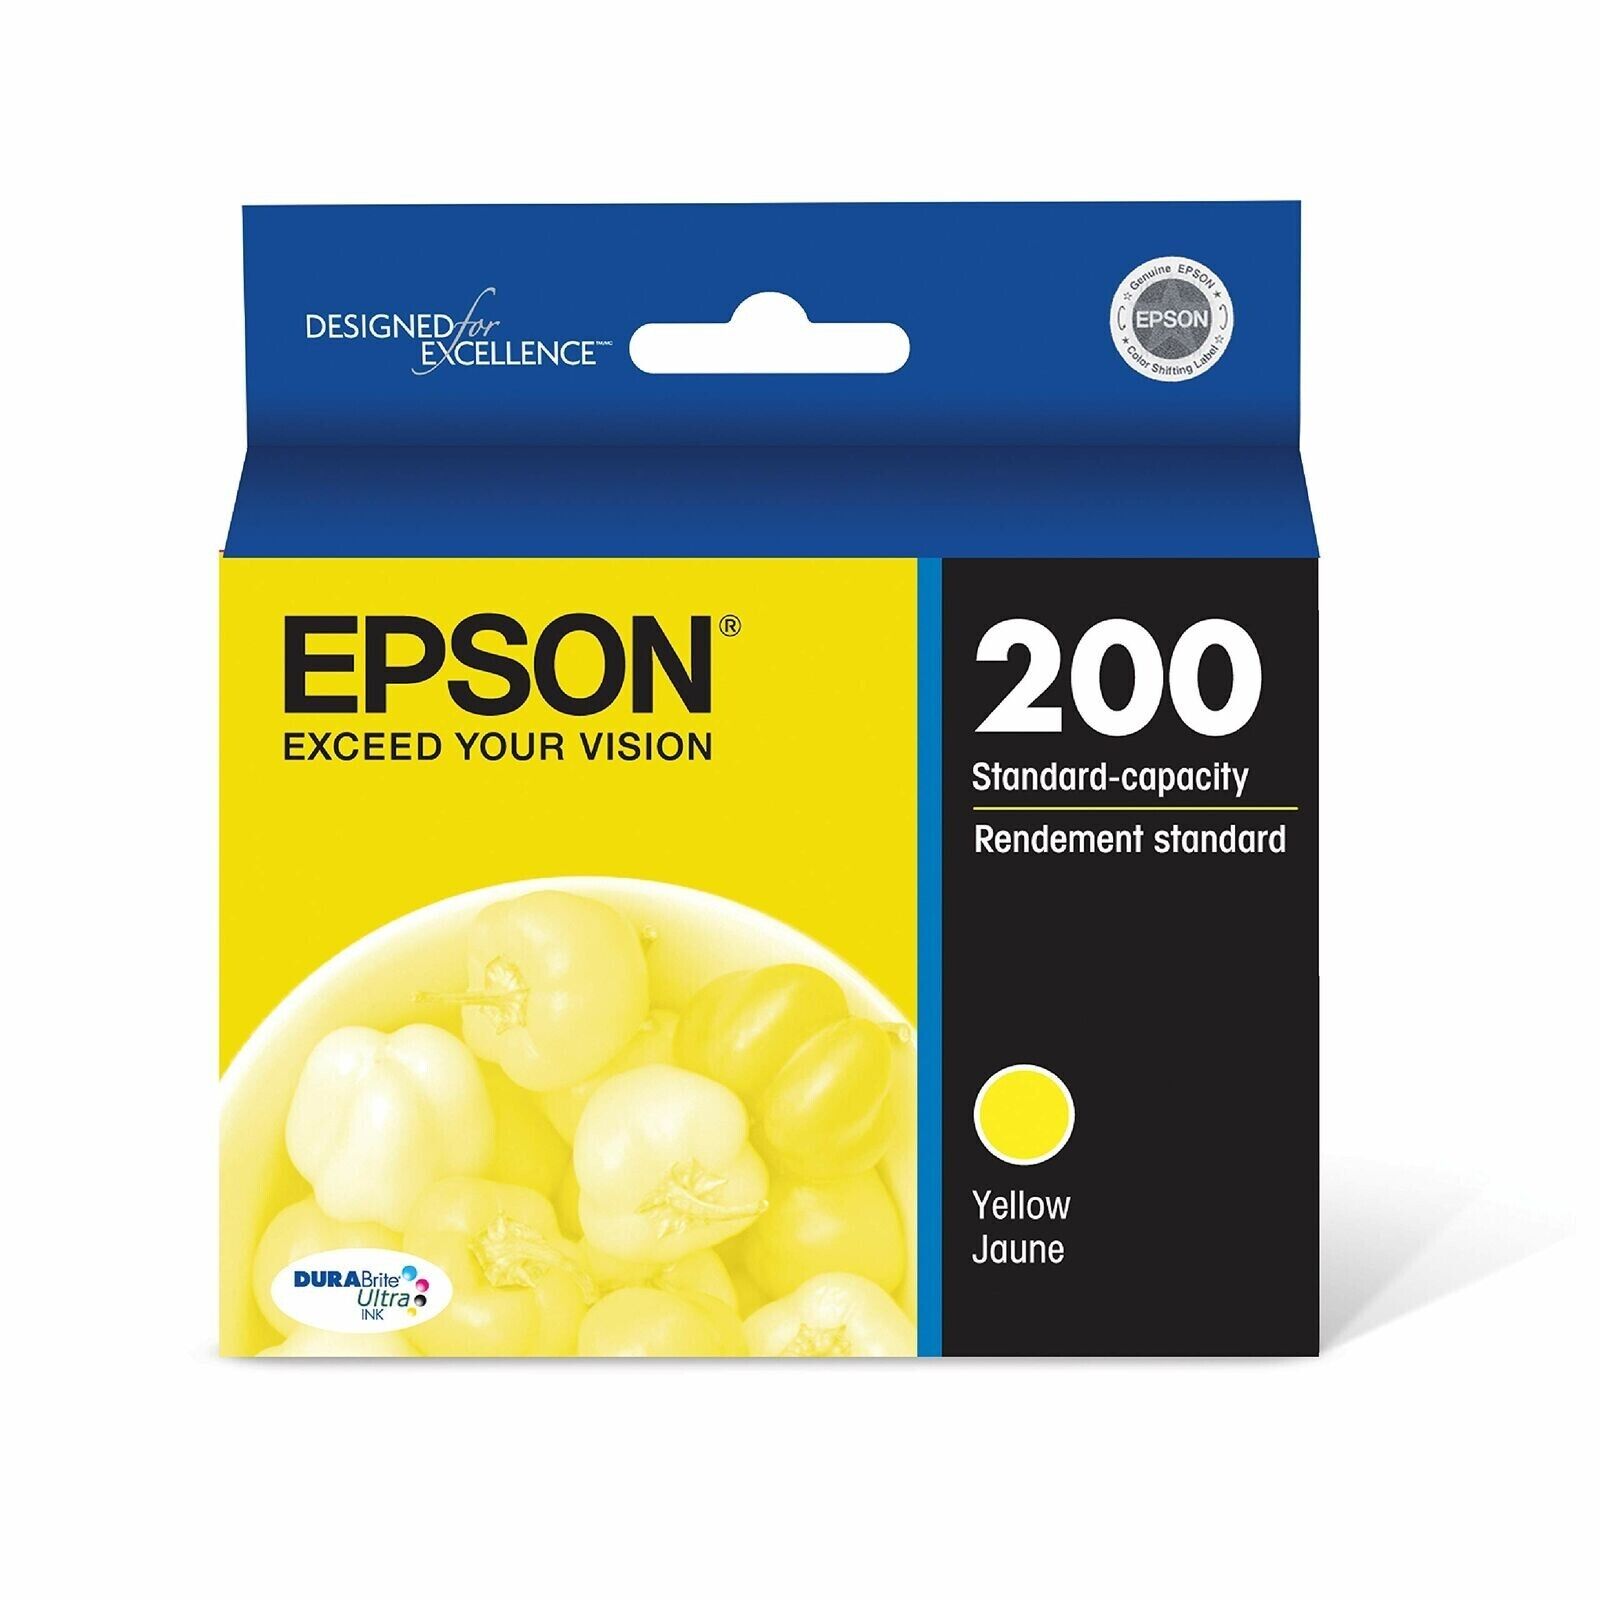 Epson 200 DURABrite Ultra Yellow Standard Capacity Cartridge Ink EXP 01/2023